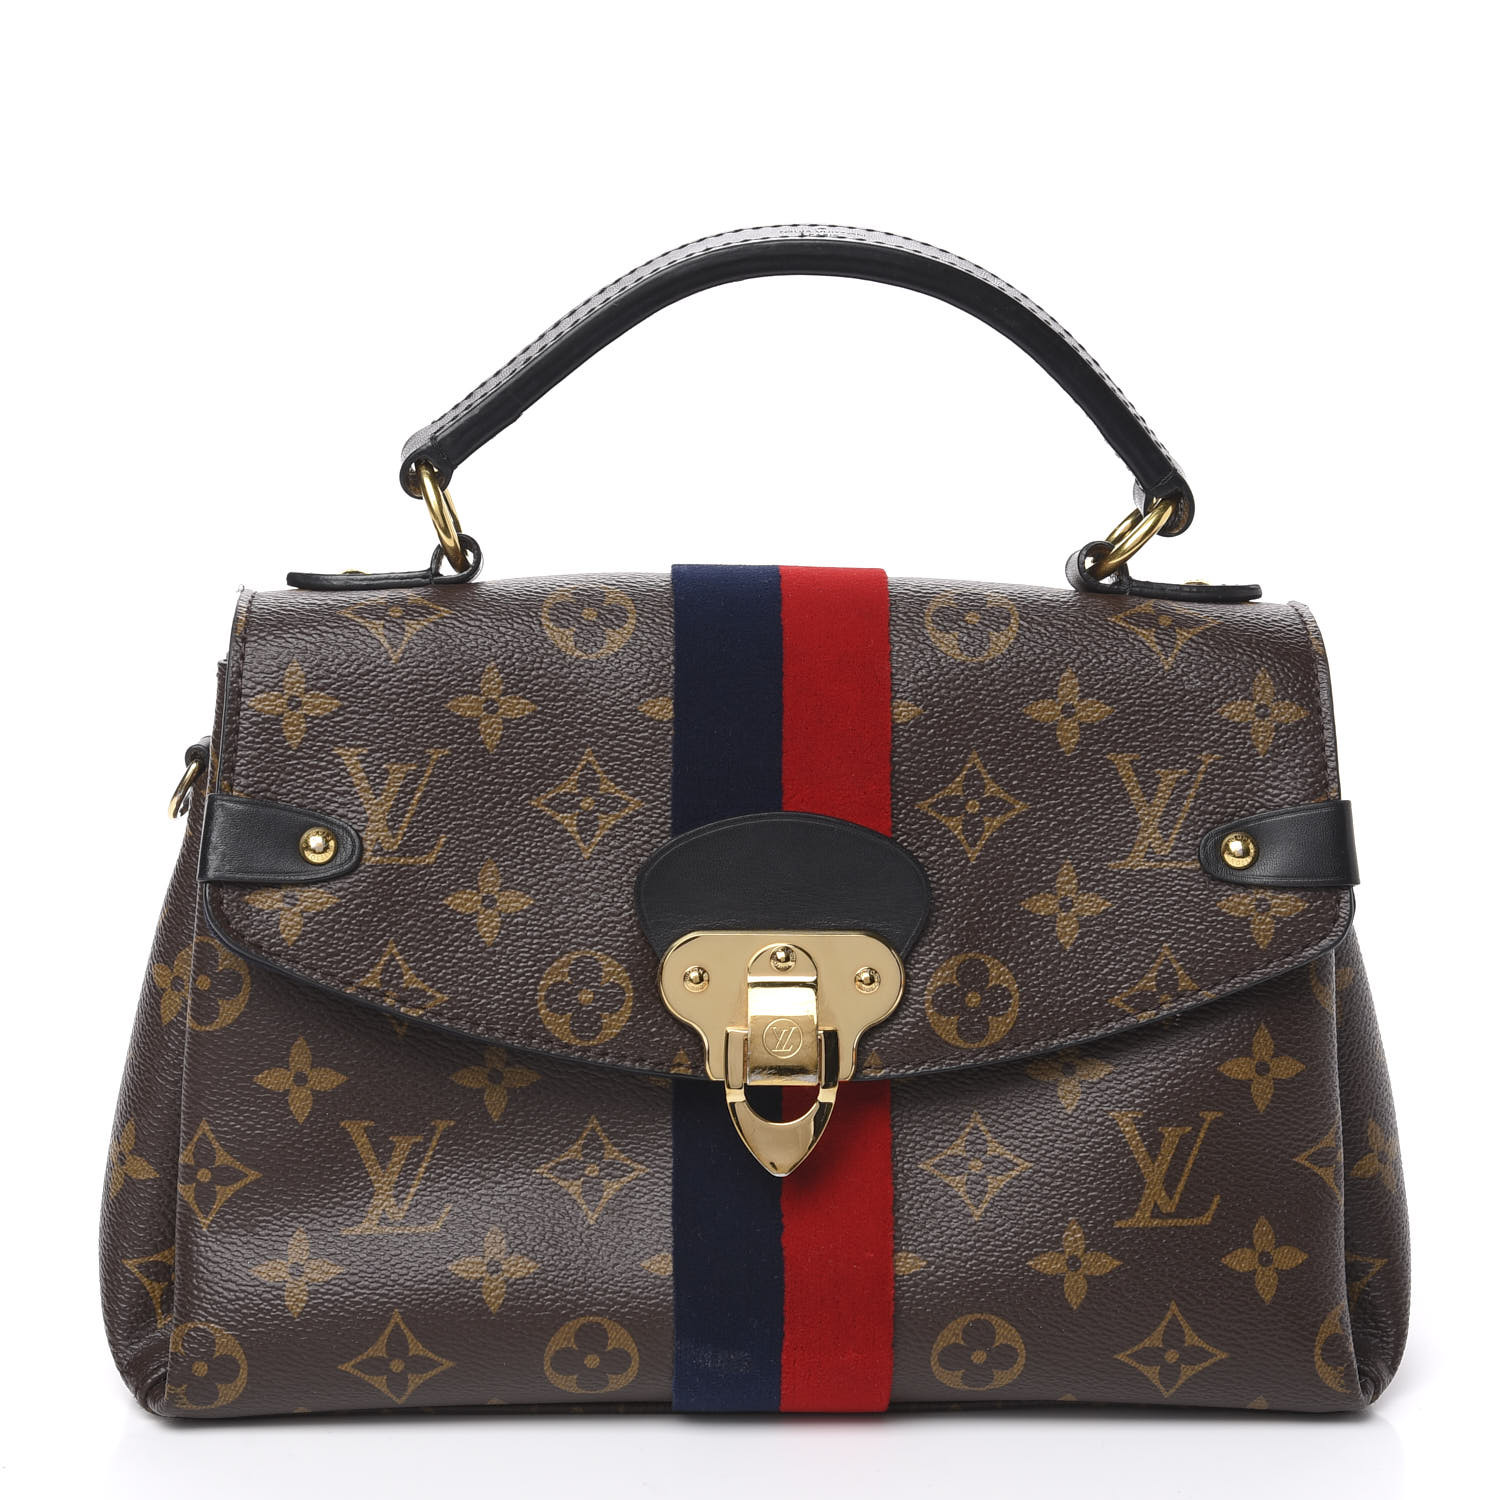 Gucci Vs Louis Vuitton Bags  Natural Resource Department